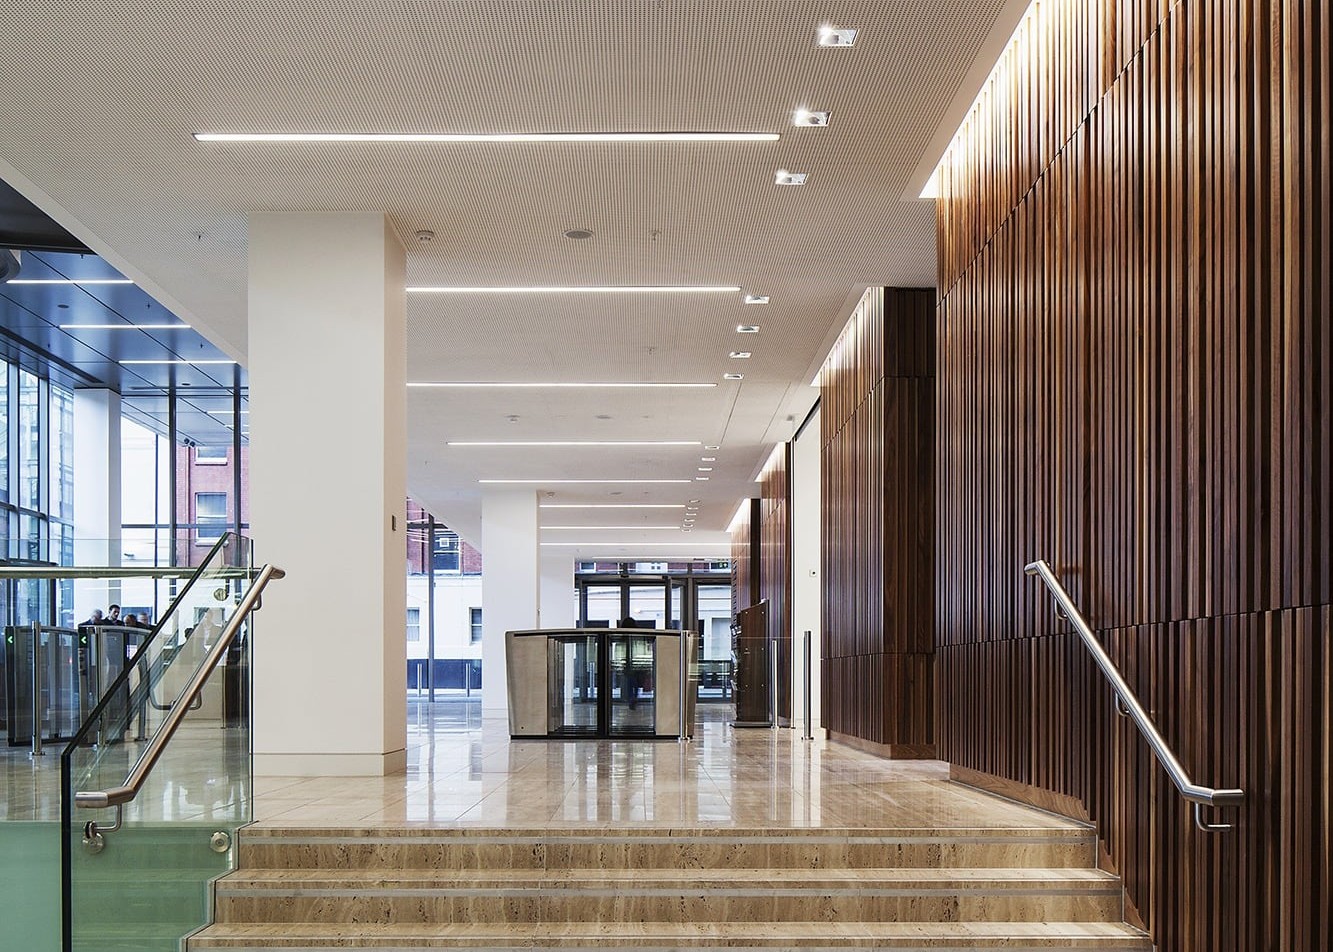 retail lighting design: One Spinningfields stairway